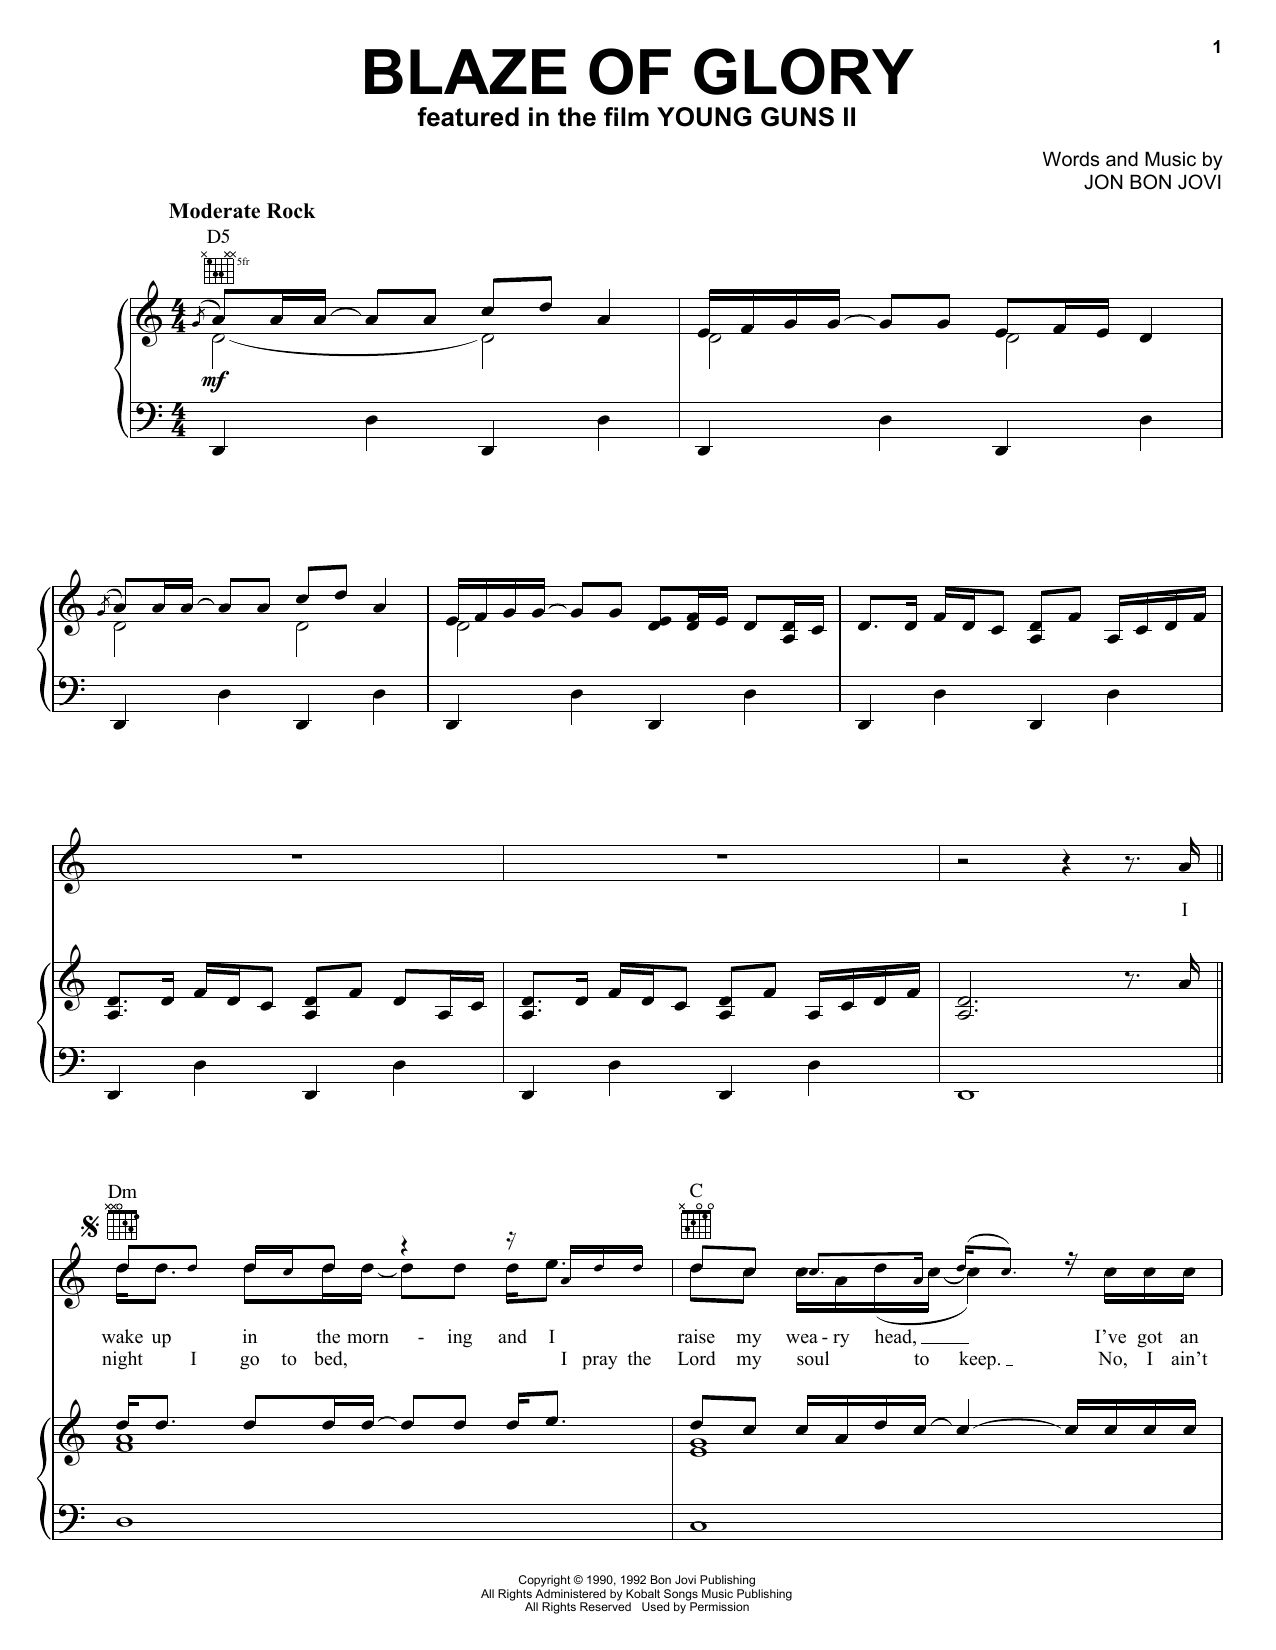 Jon Bon Jovi Blaze Of Glory Sheet Music Notes & Chords for Viola - Download or Print PDF